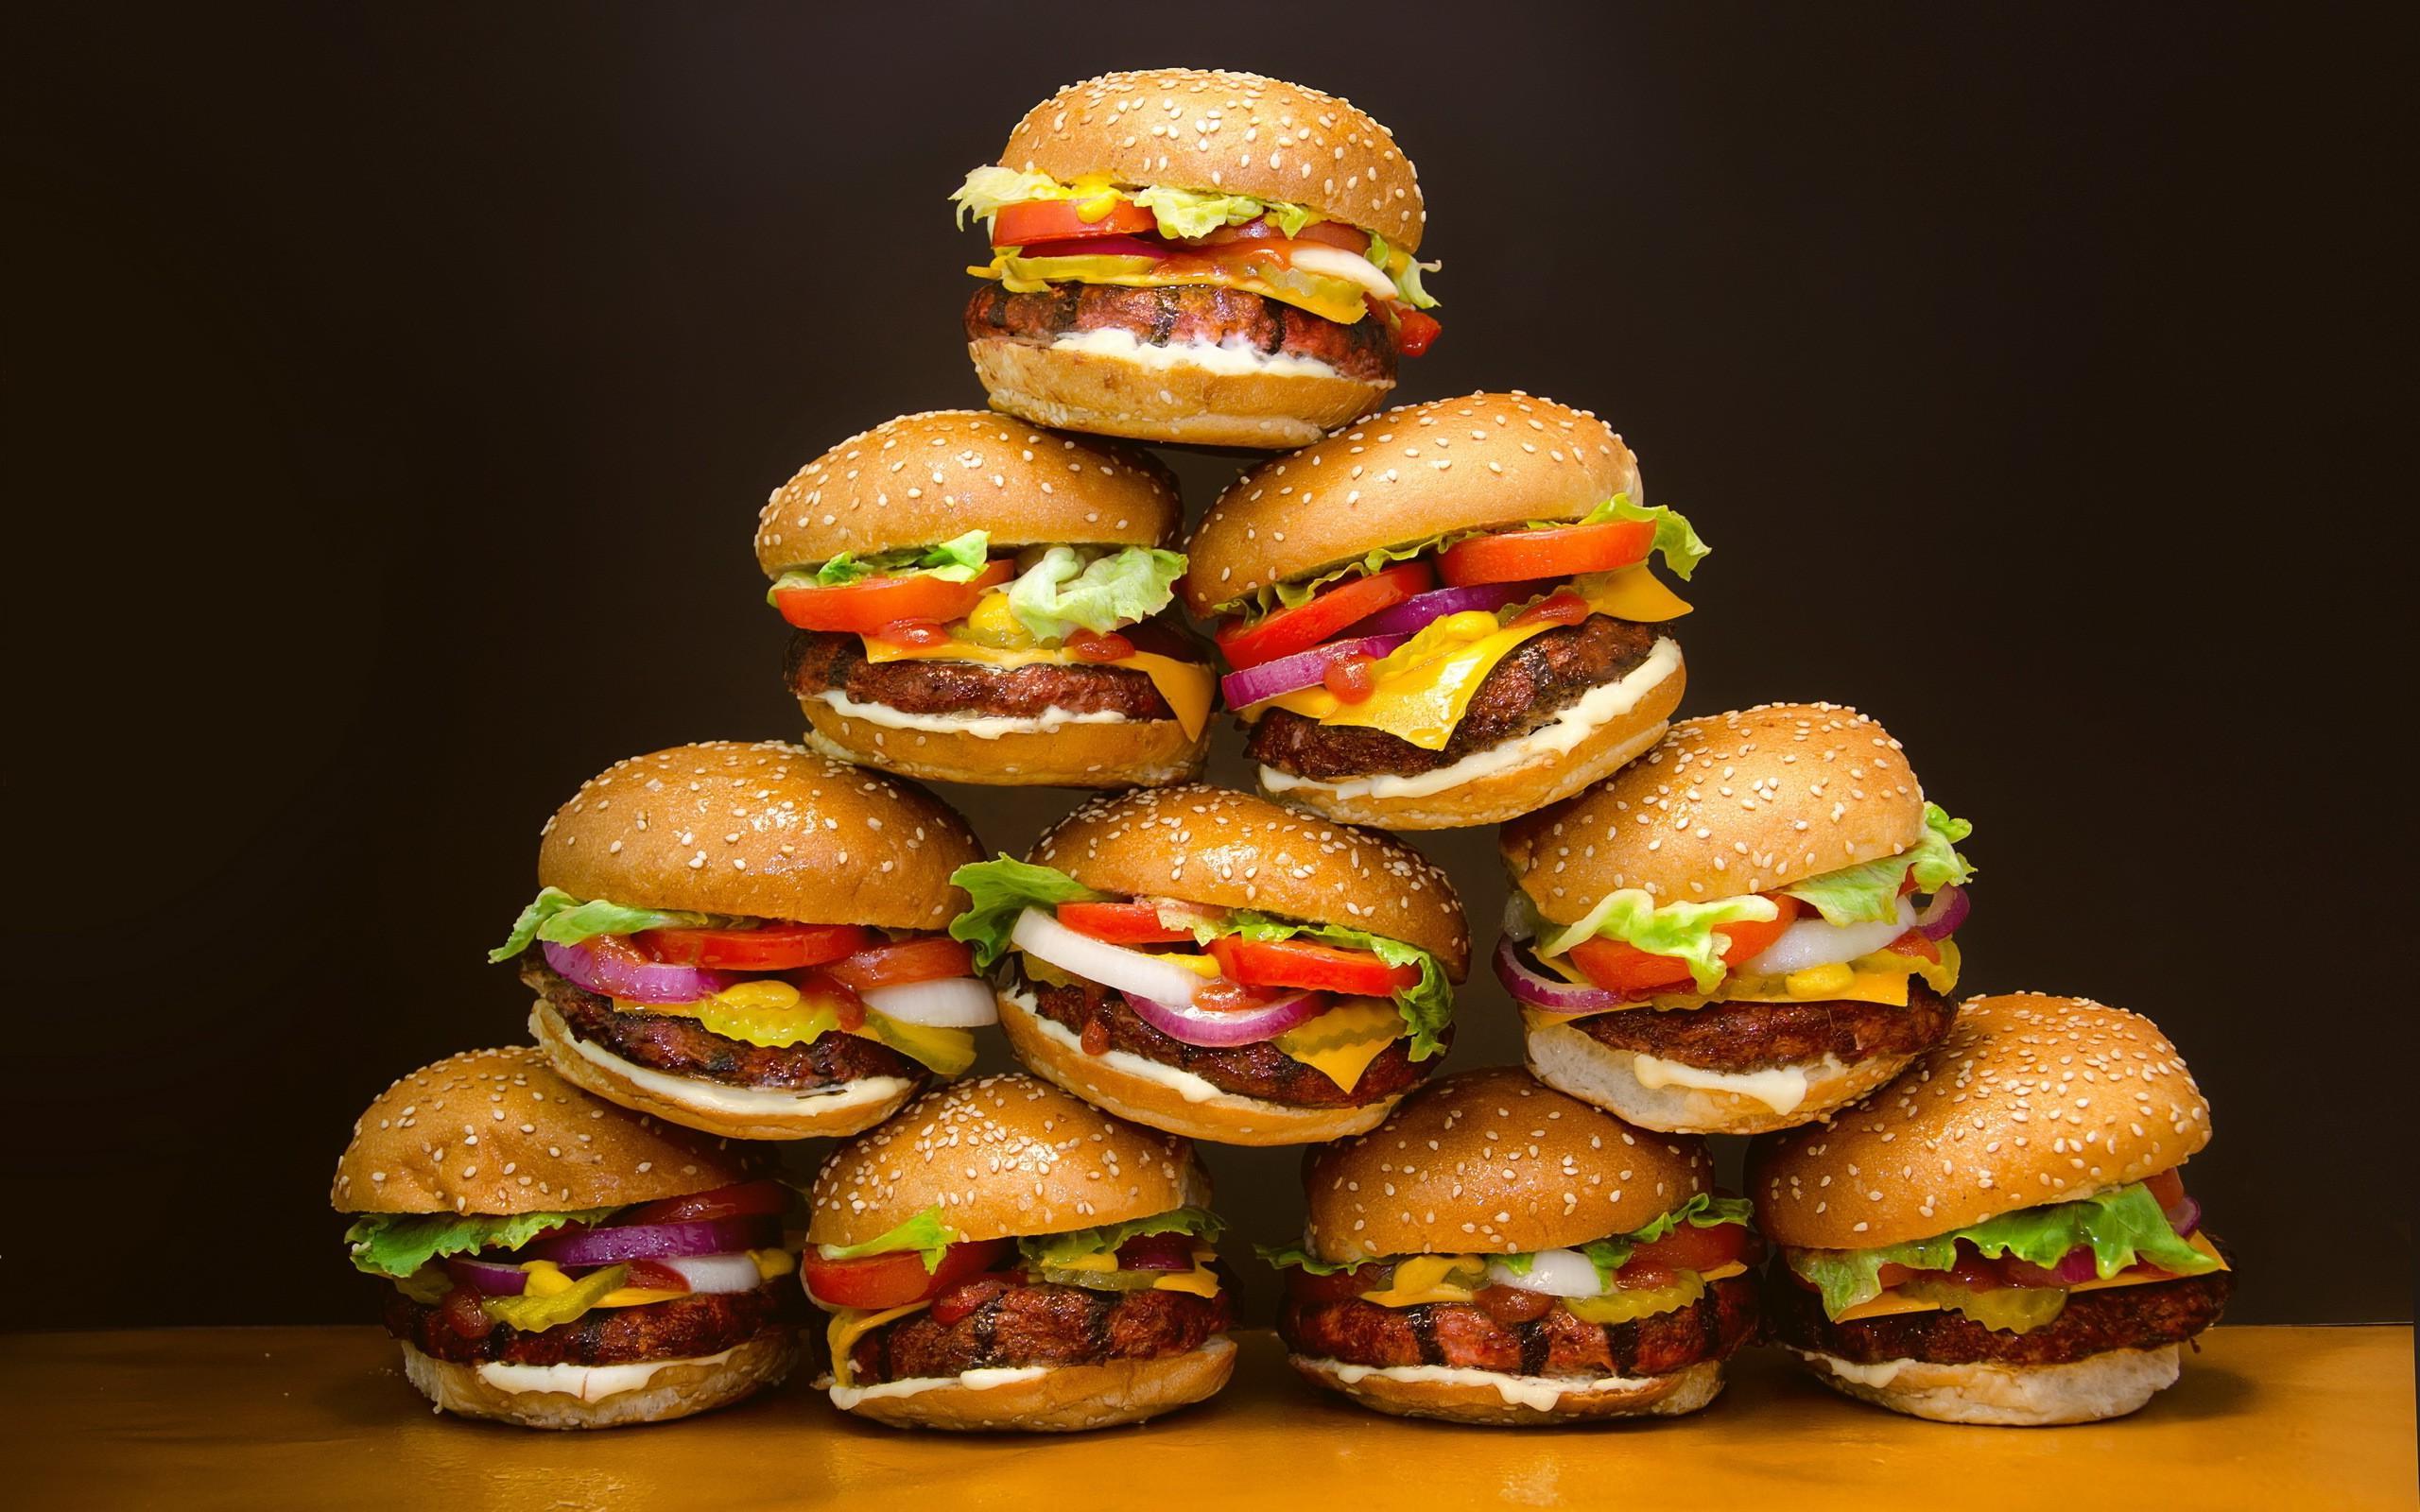 Wallpaper Burger Background Wallpaper Image For Free Download  Pngtree